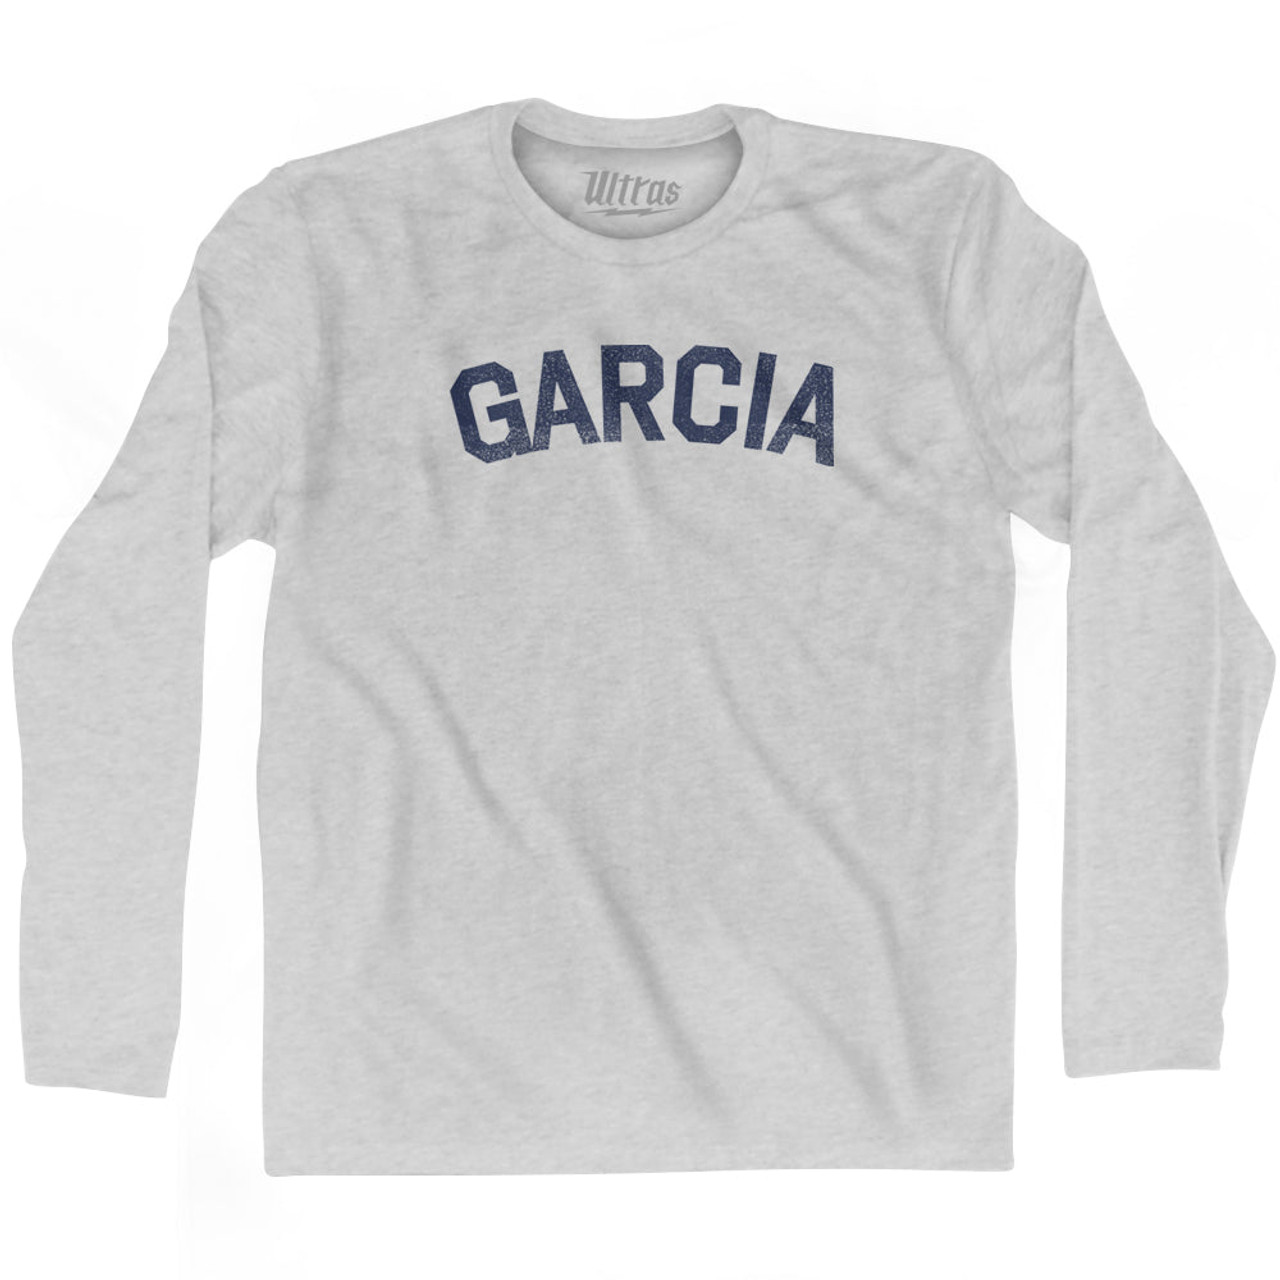 GARCIA Adult Long - Heather Sleeve Cotton Grey T-shirt